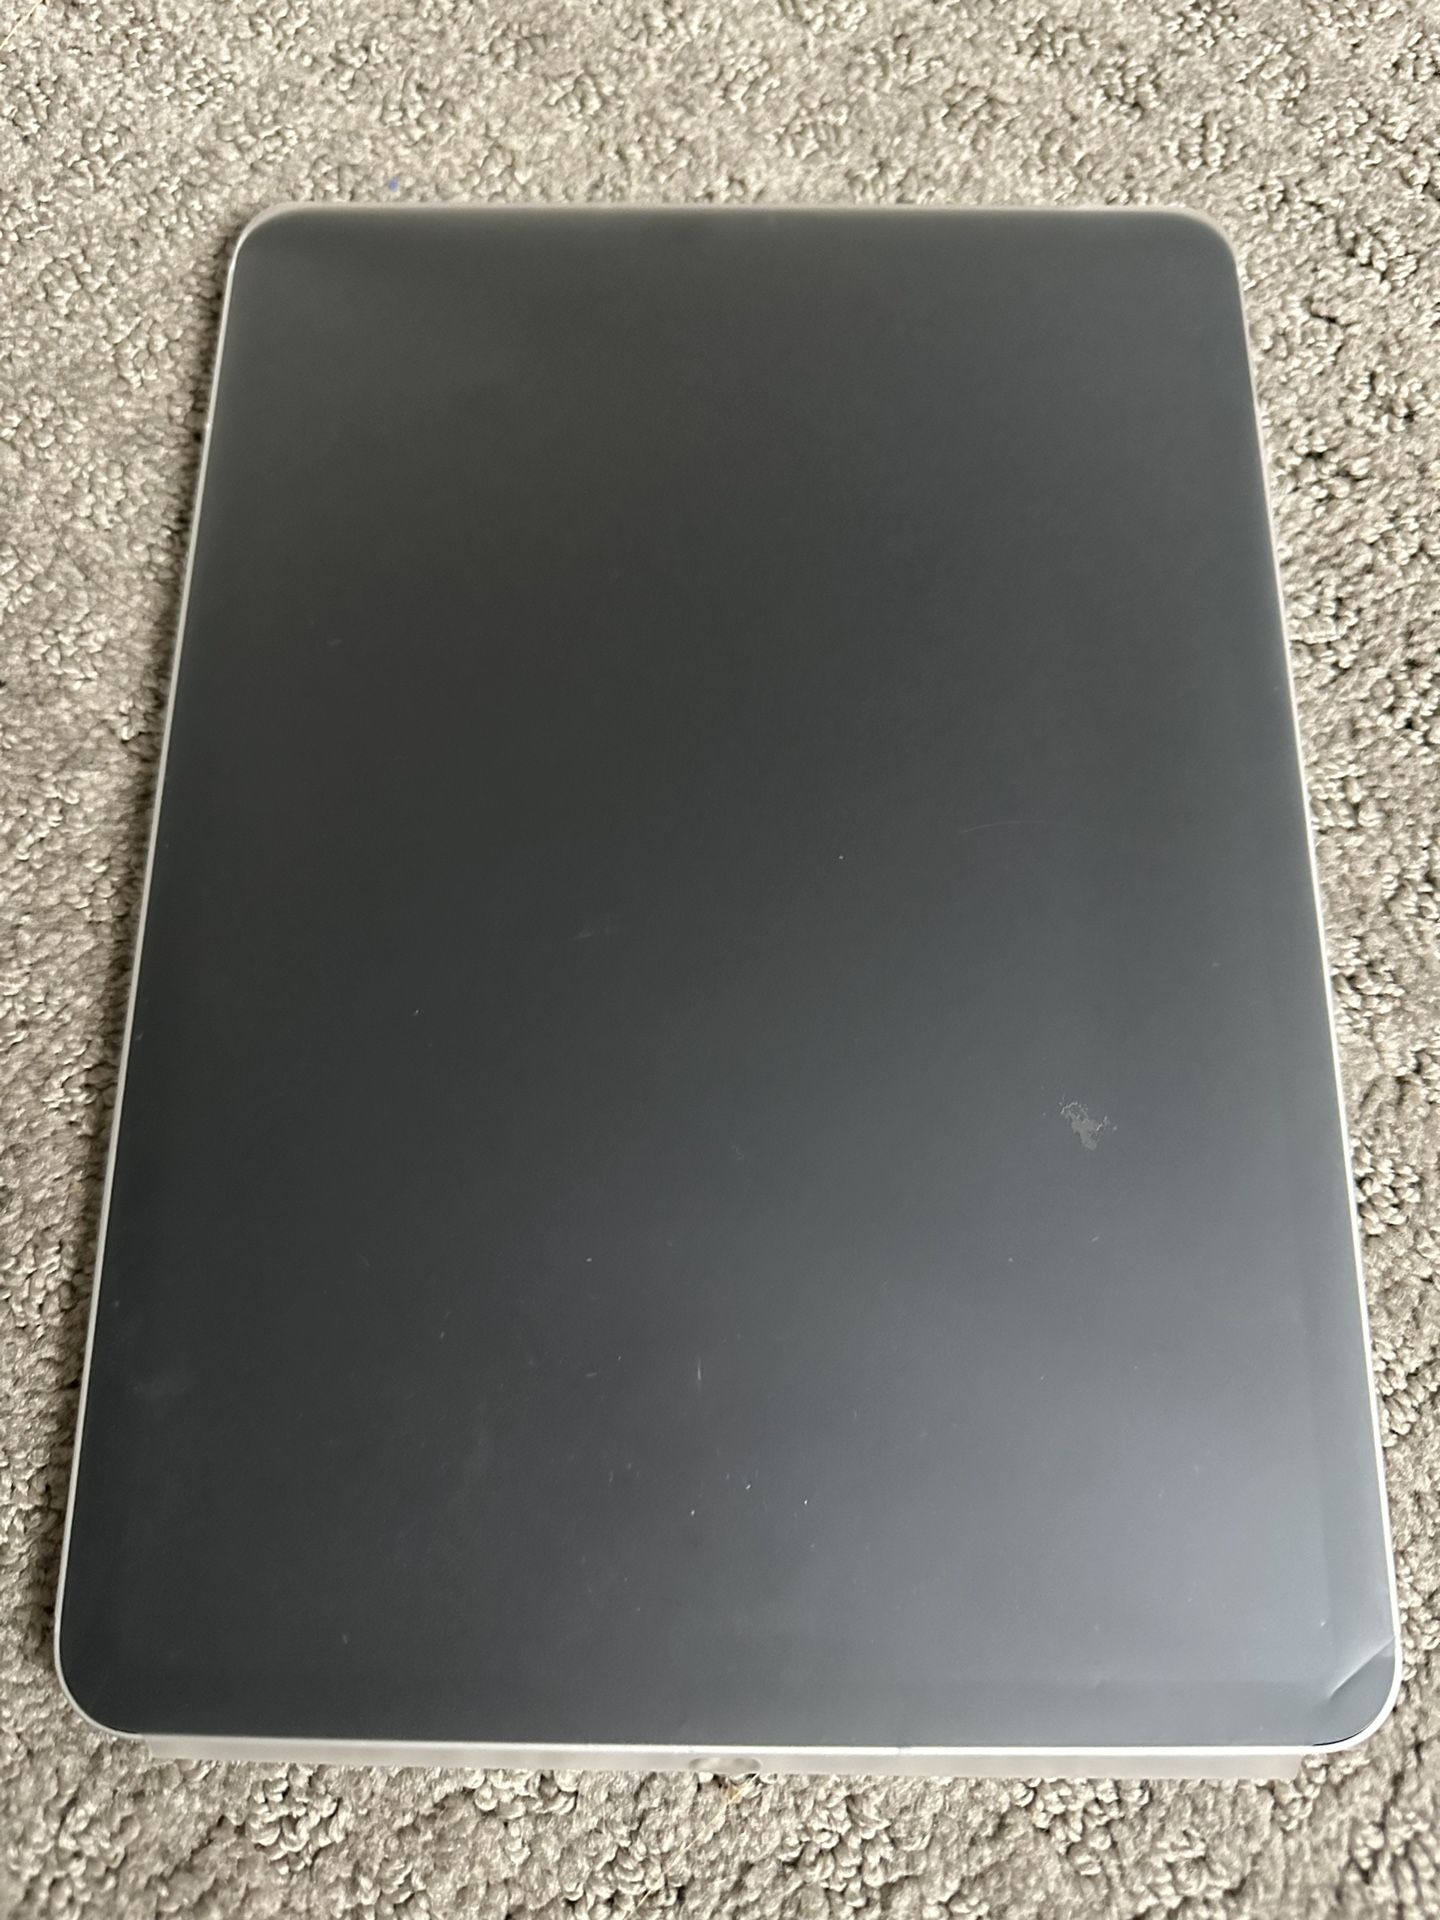 $420 - New without box - Apple iPad Pro 1st Gen. 256GB 2018 Gray WiFi model a2013